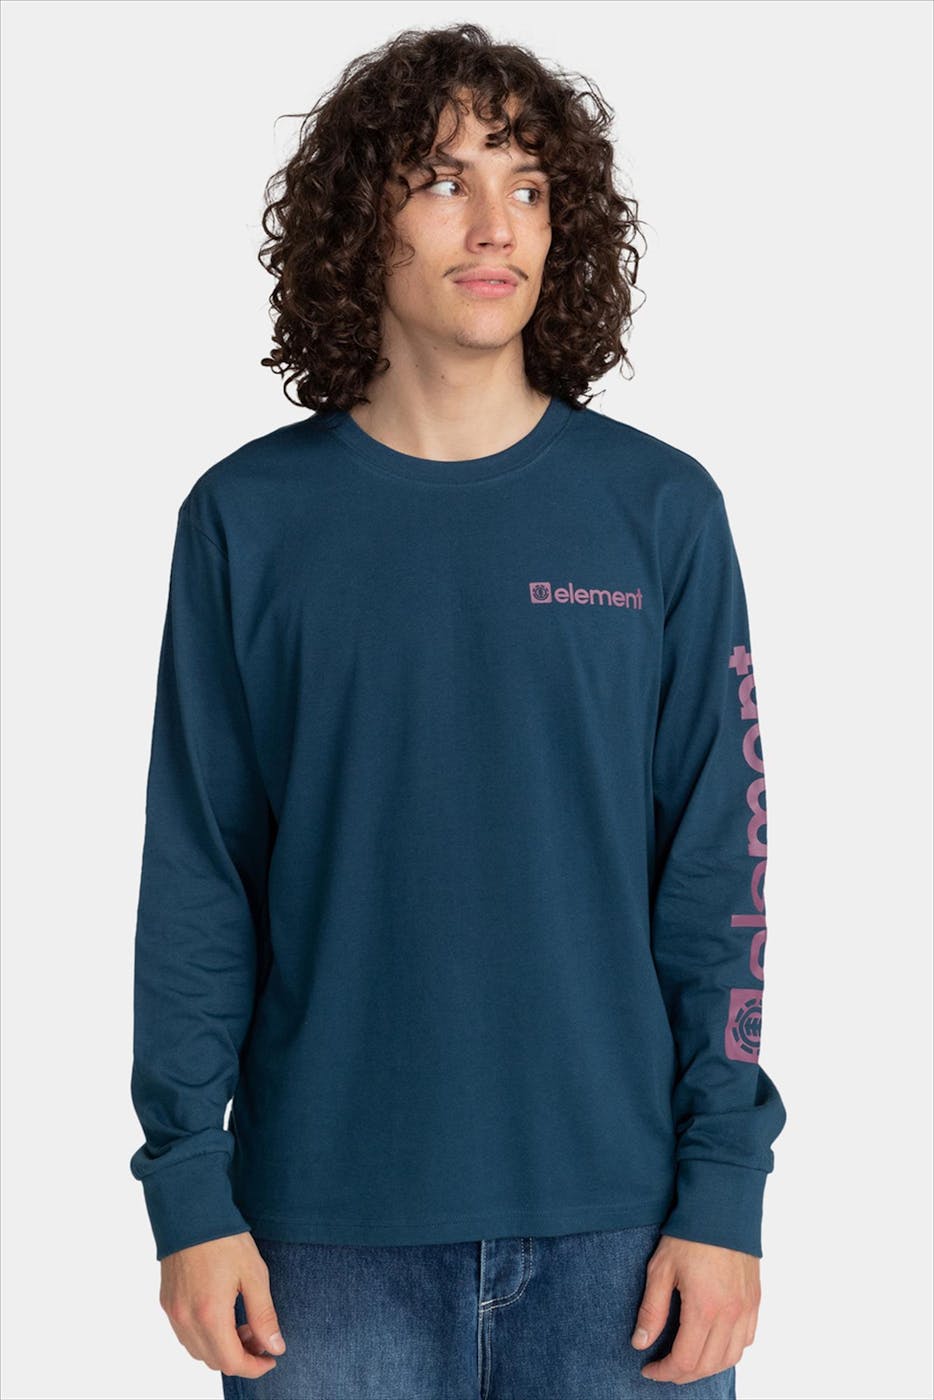 Element - Blauwe Joint T-shirt